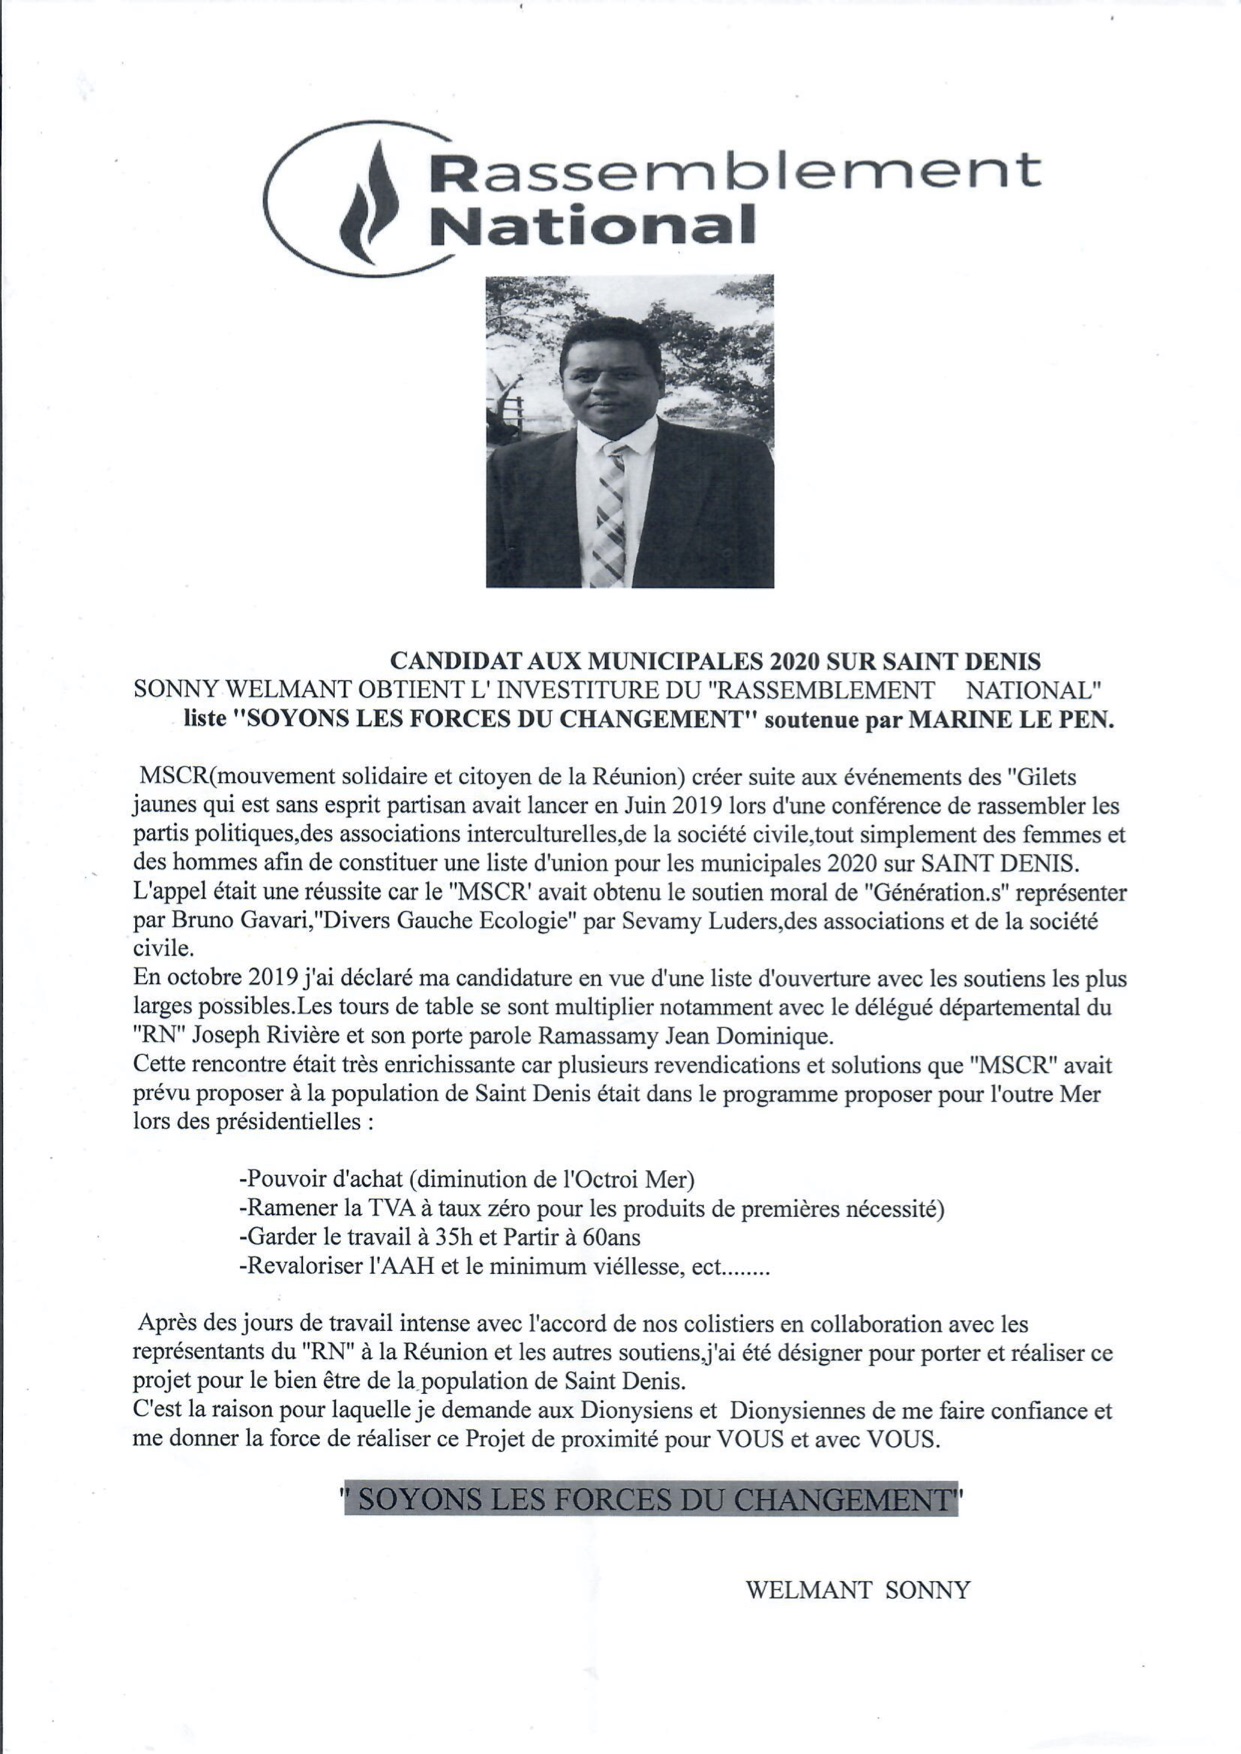 St-Denis: Sonny Welmant obtient l'investiture du Rassemblement national